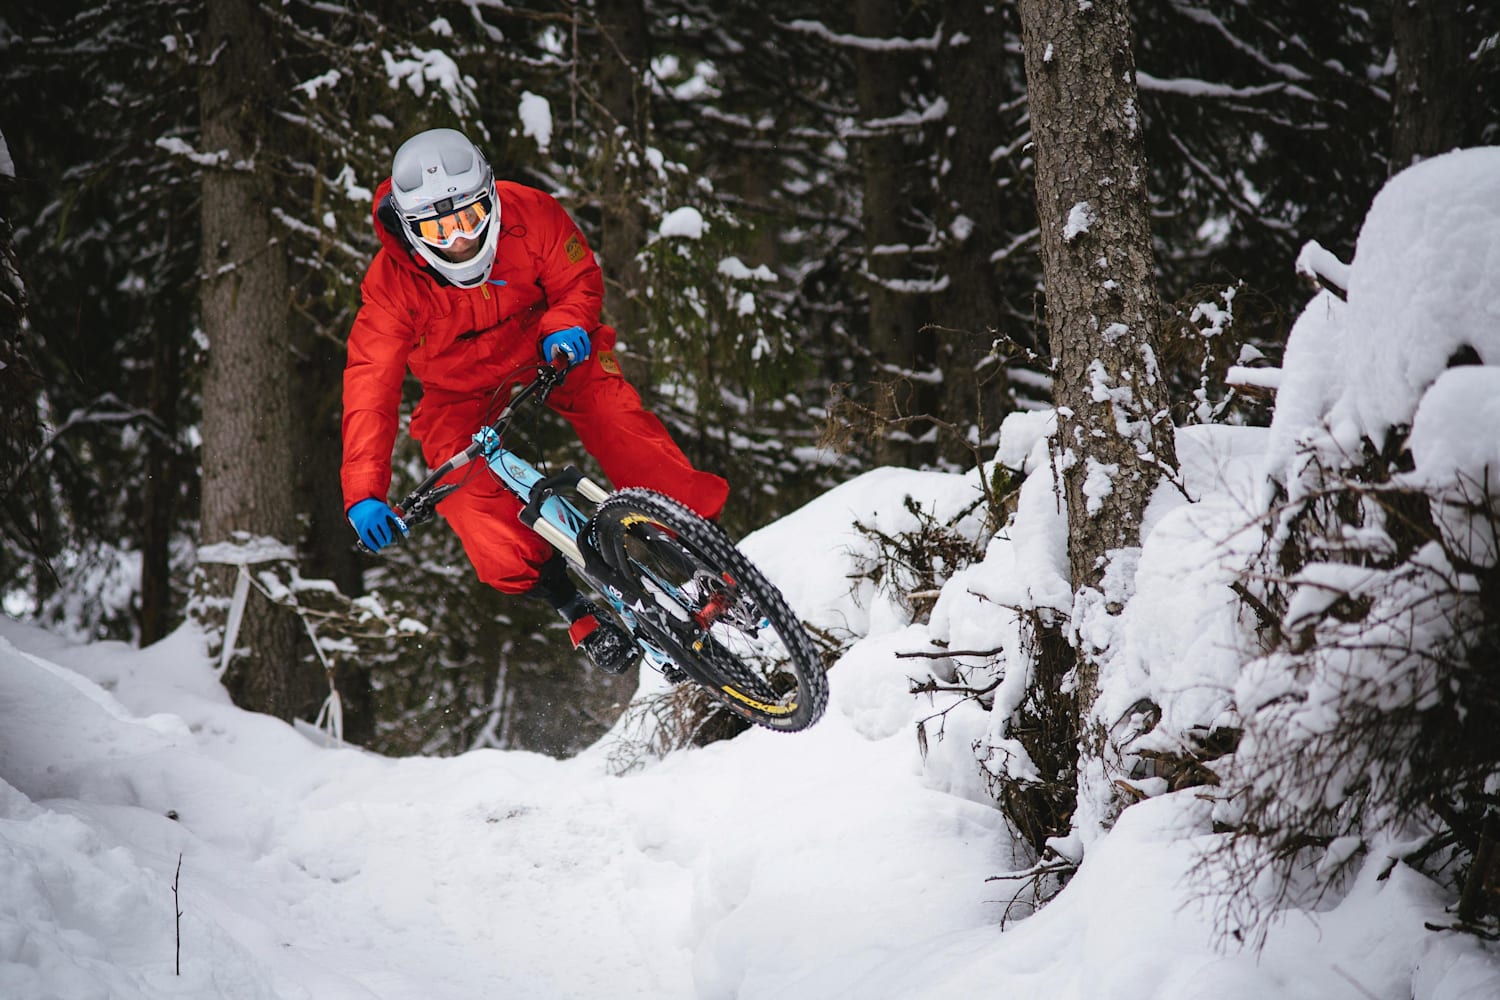 riding mountain bike in snow